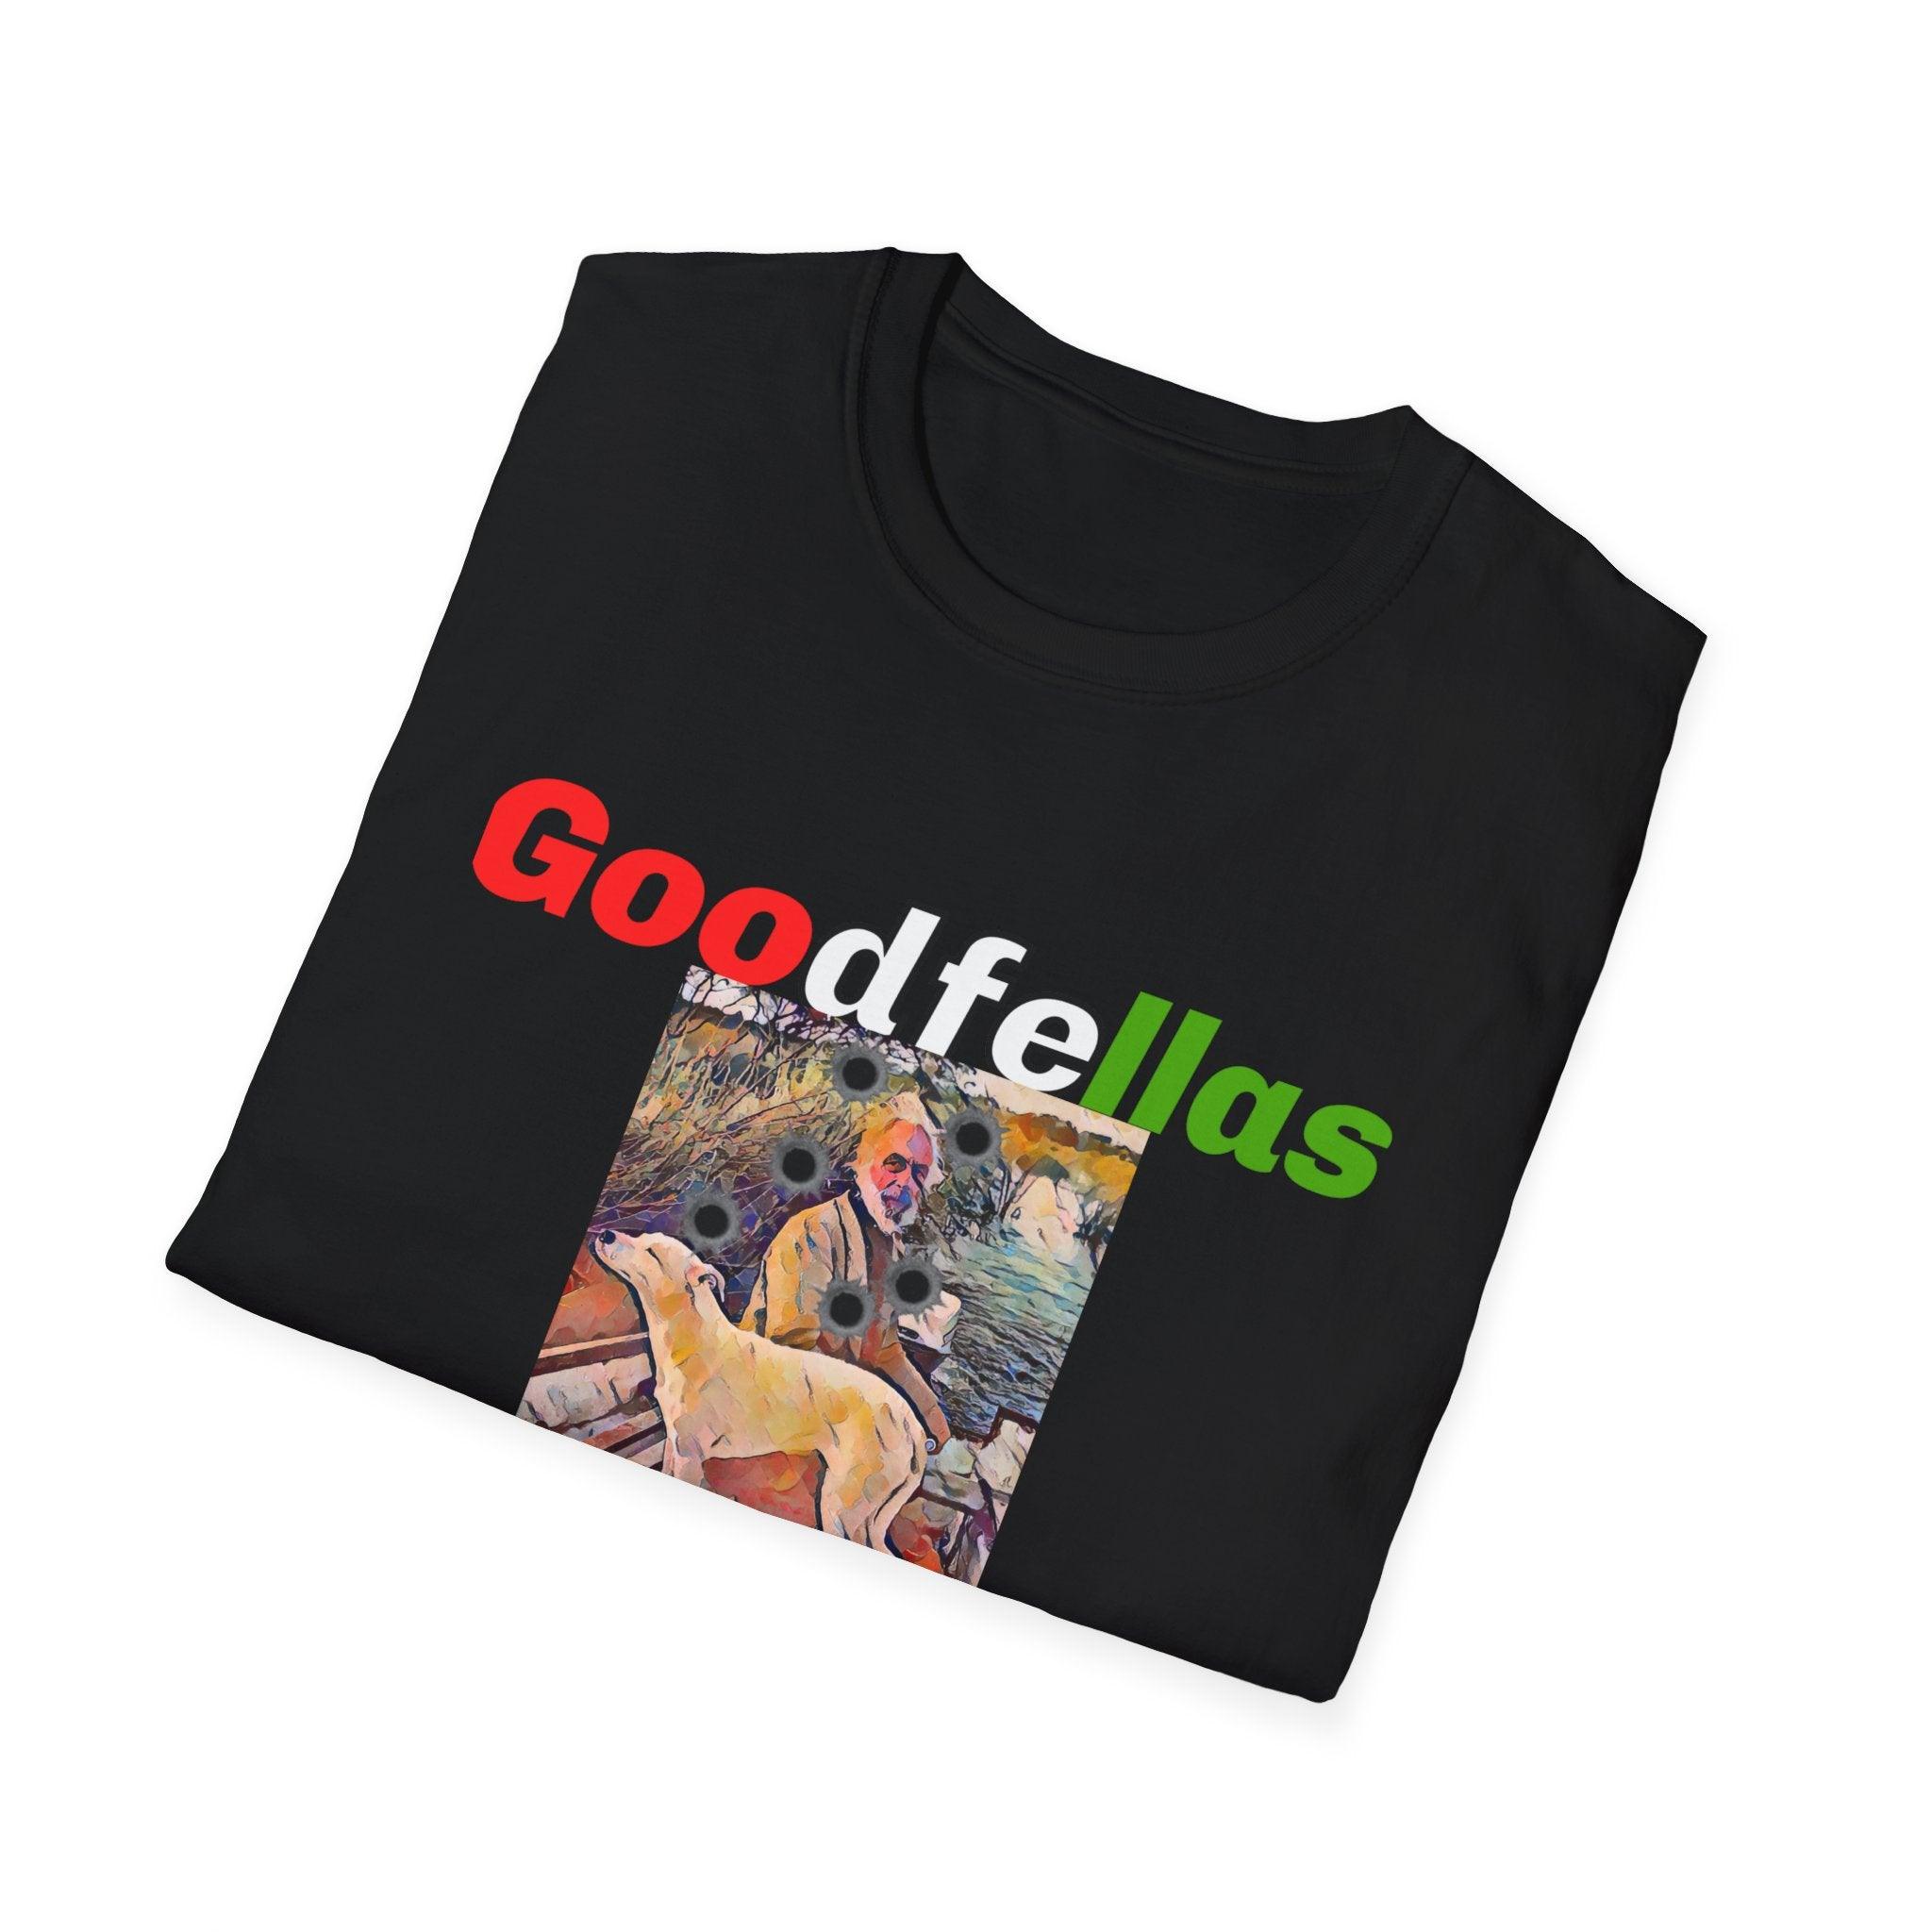 Goodfellas - “Looks like someone we know” t-shirt - Epic Shirts 403